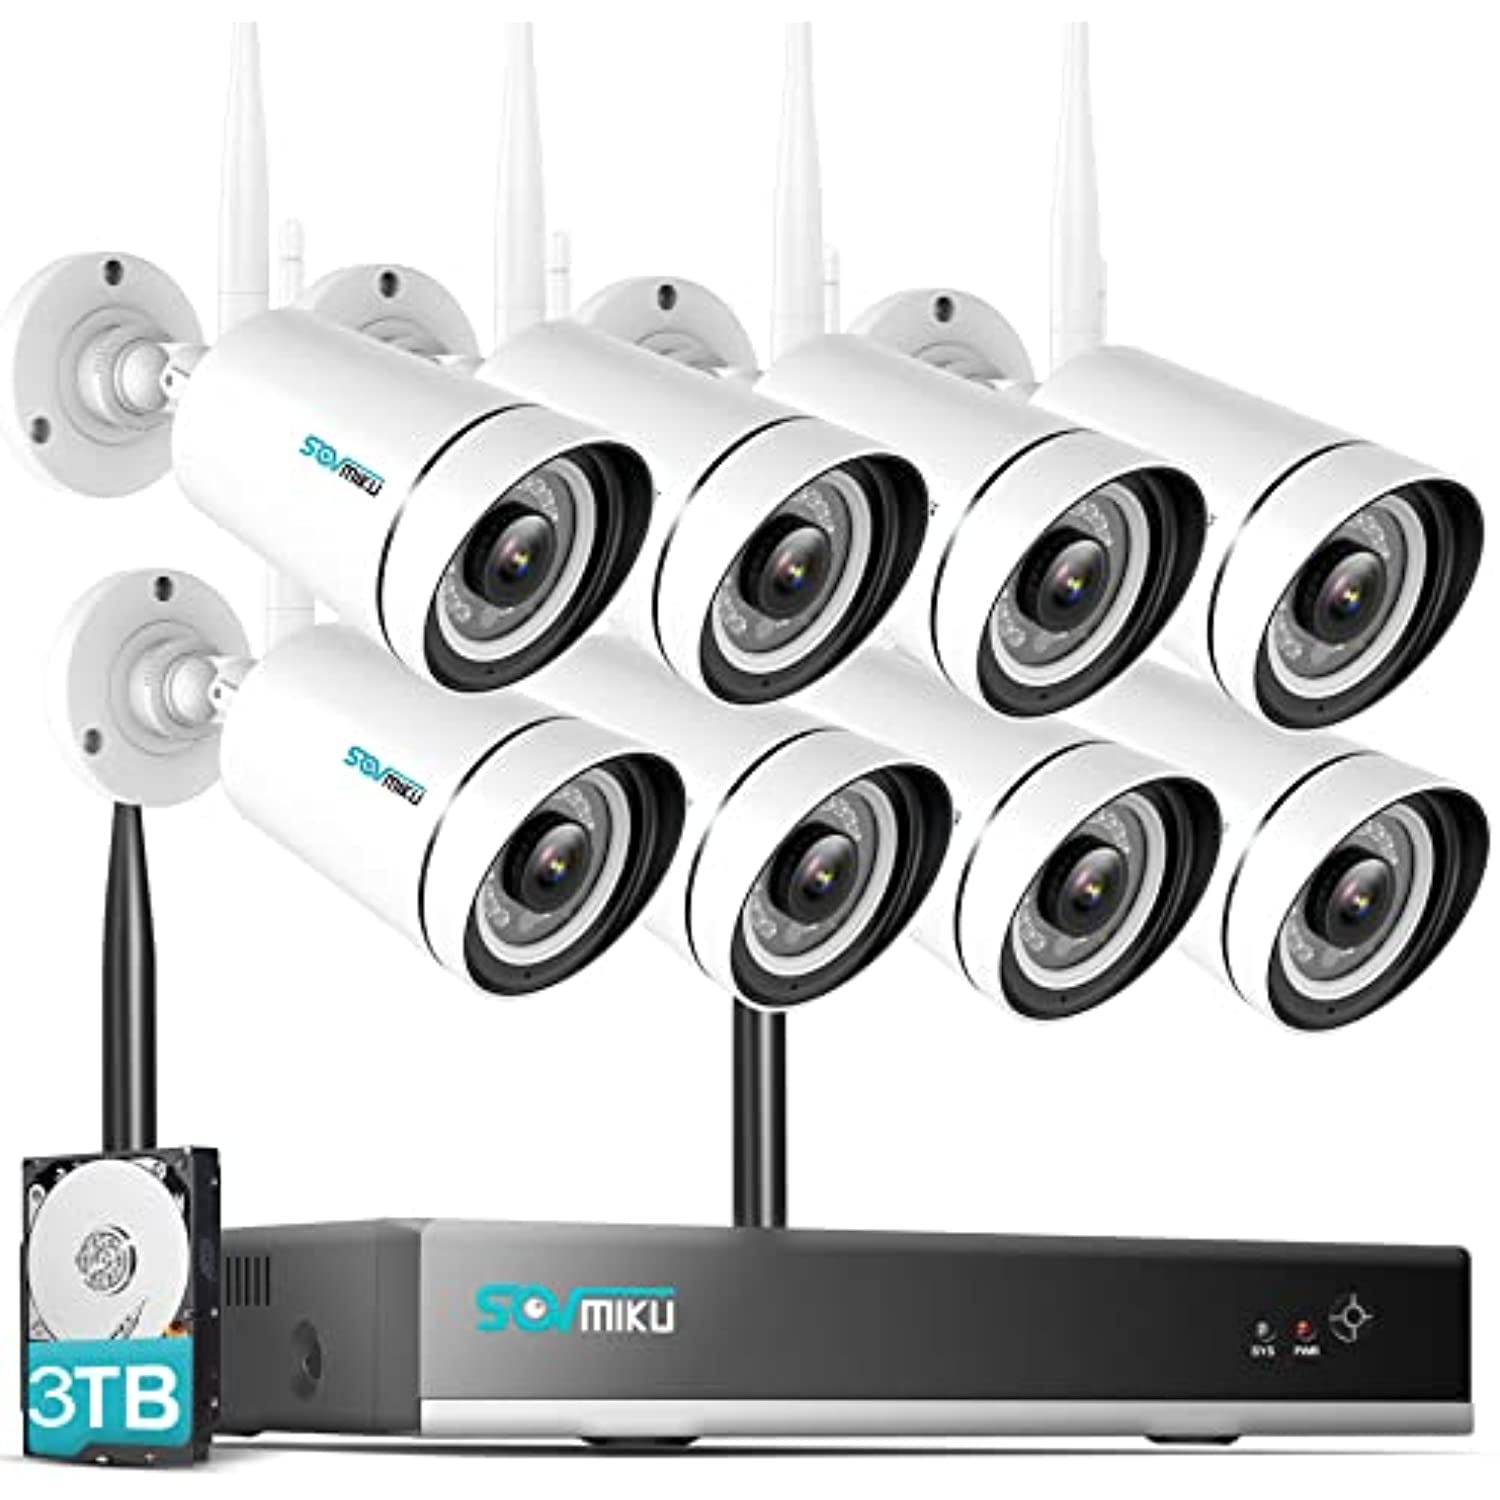 Wireless Security Camera System 8pcs Security Cameras - 3MP